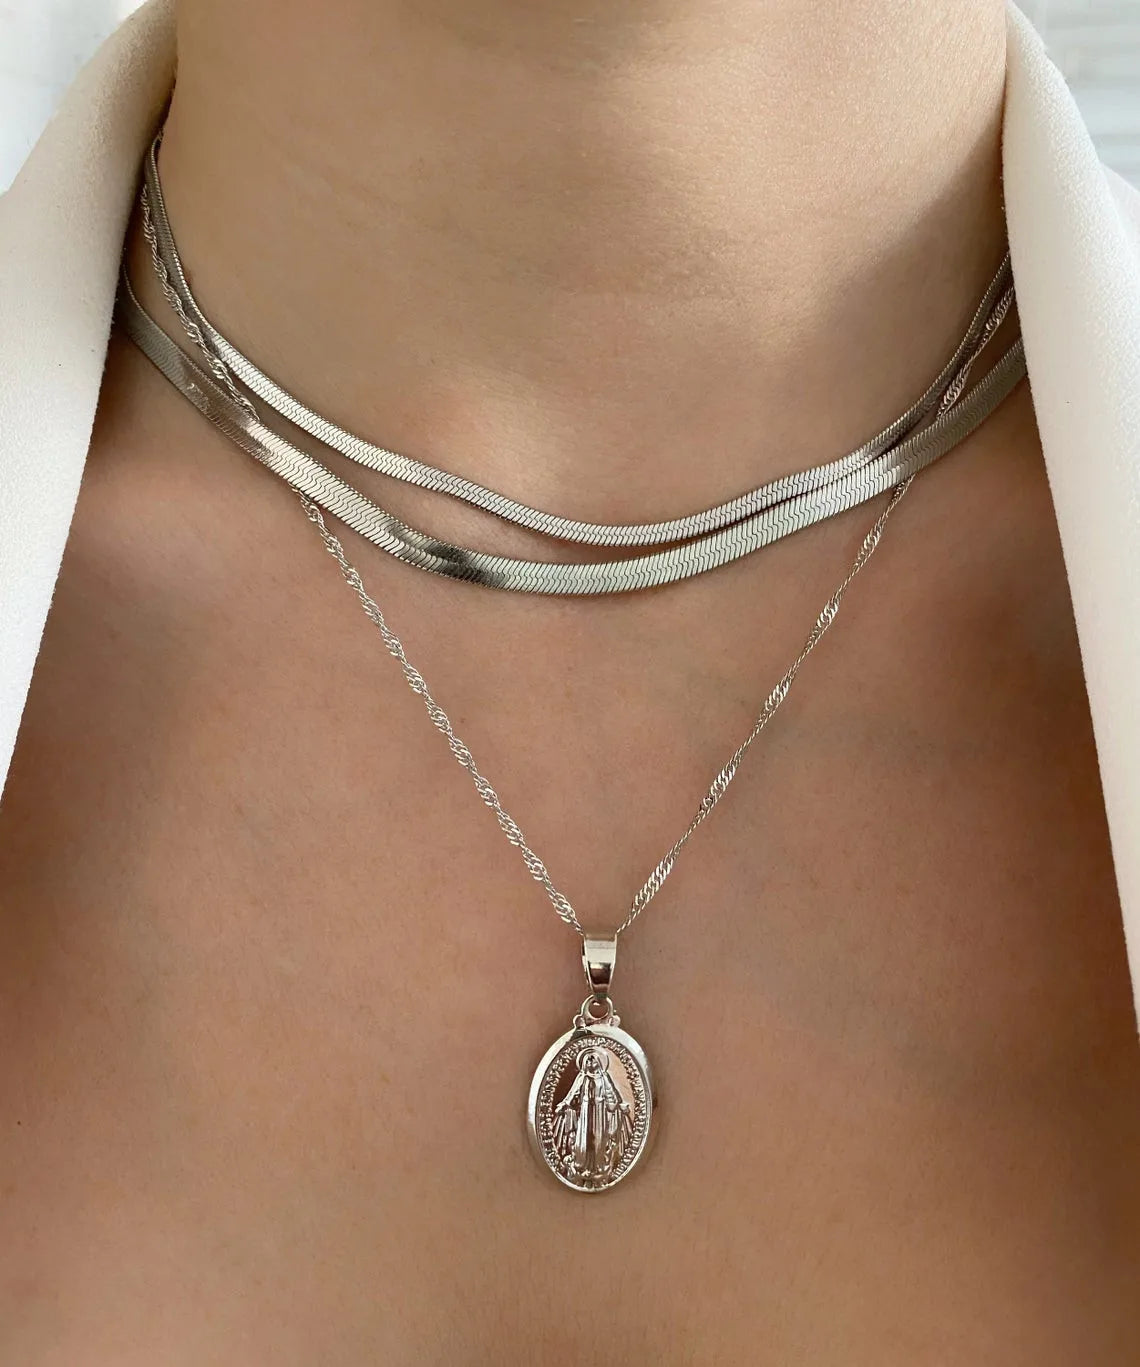 Femlion Gold Herringbone Chain Necklace Choker Unisex Stainless Steel Jewelry